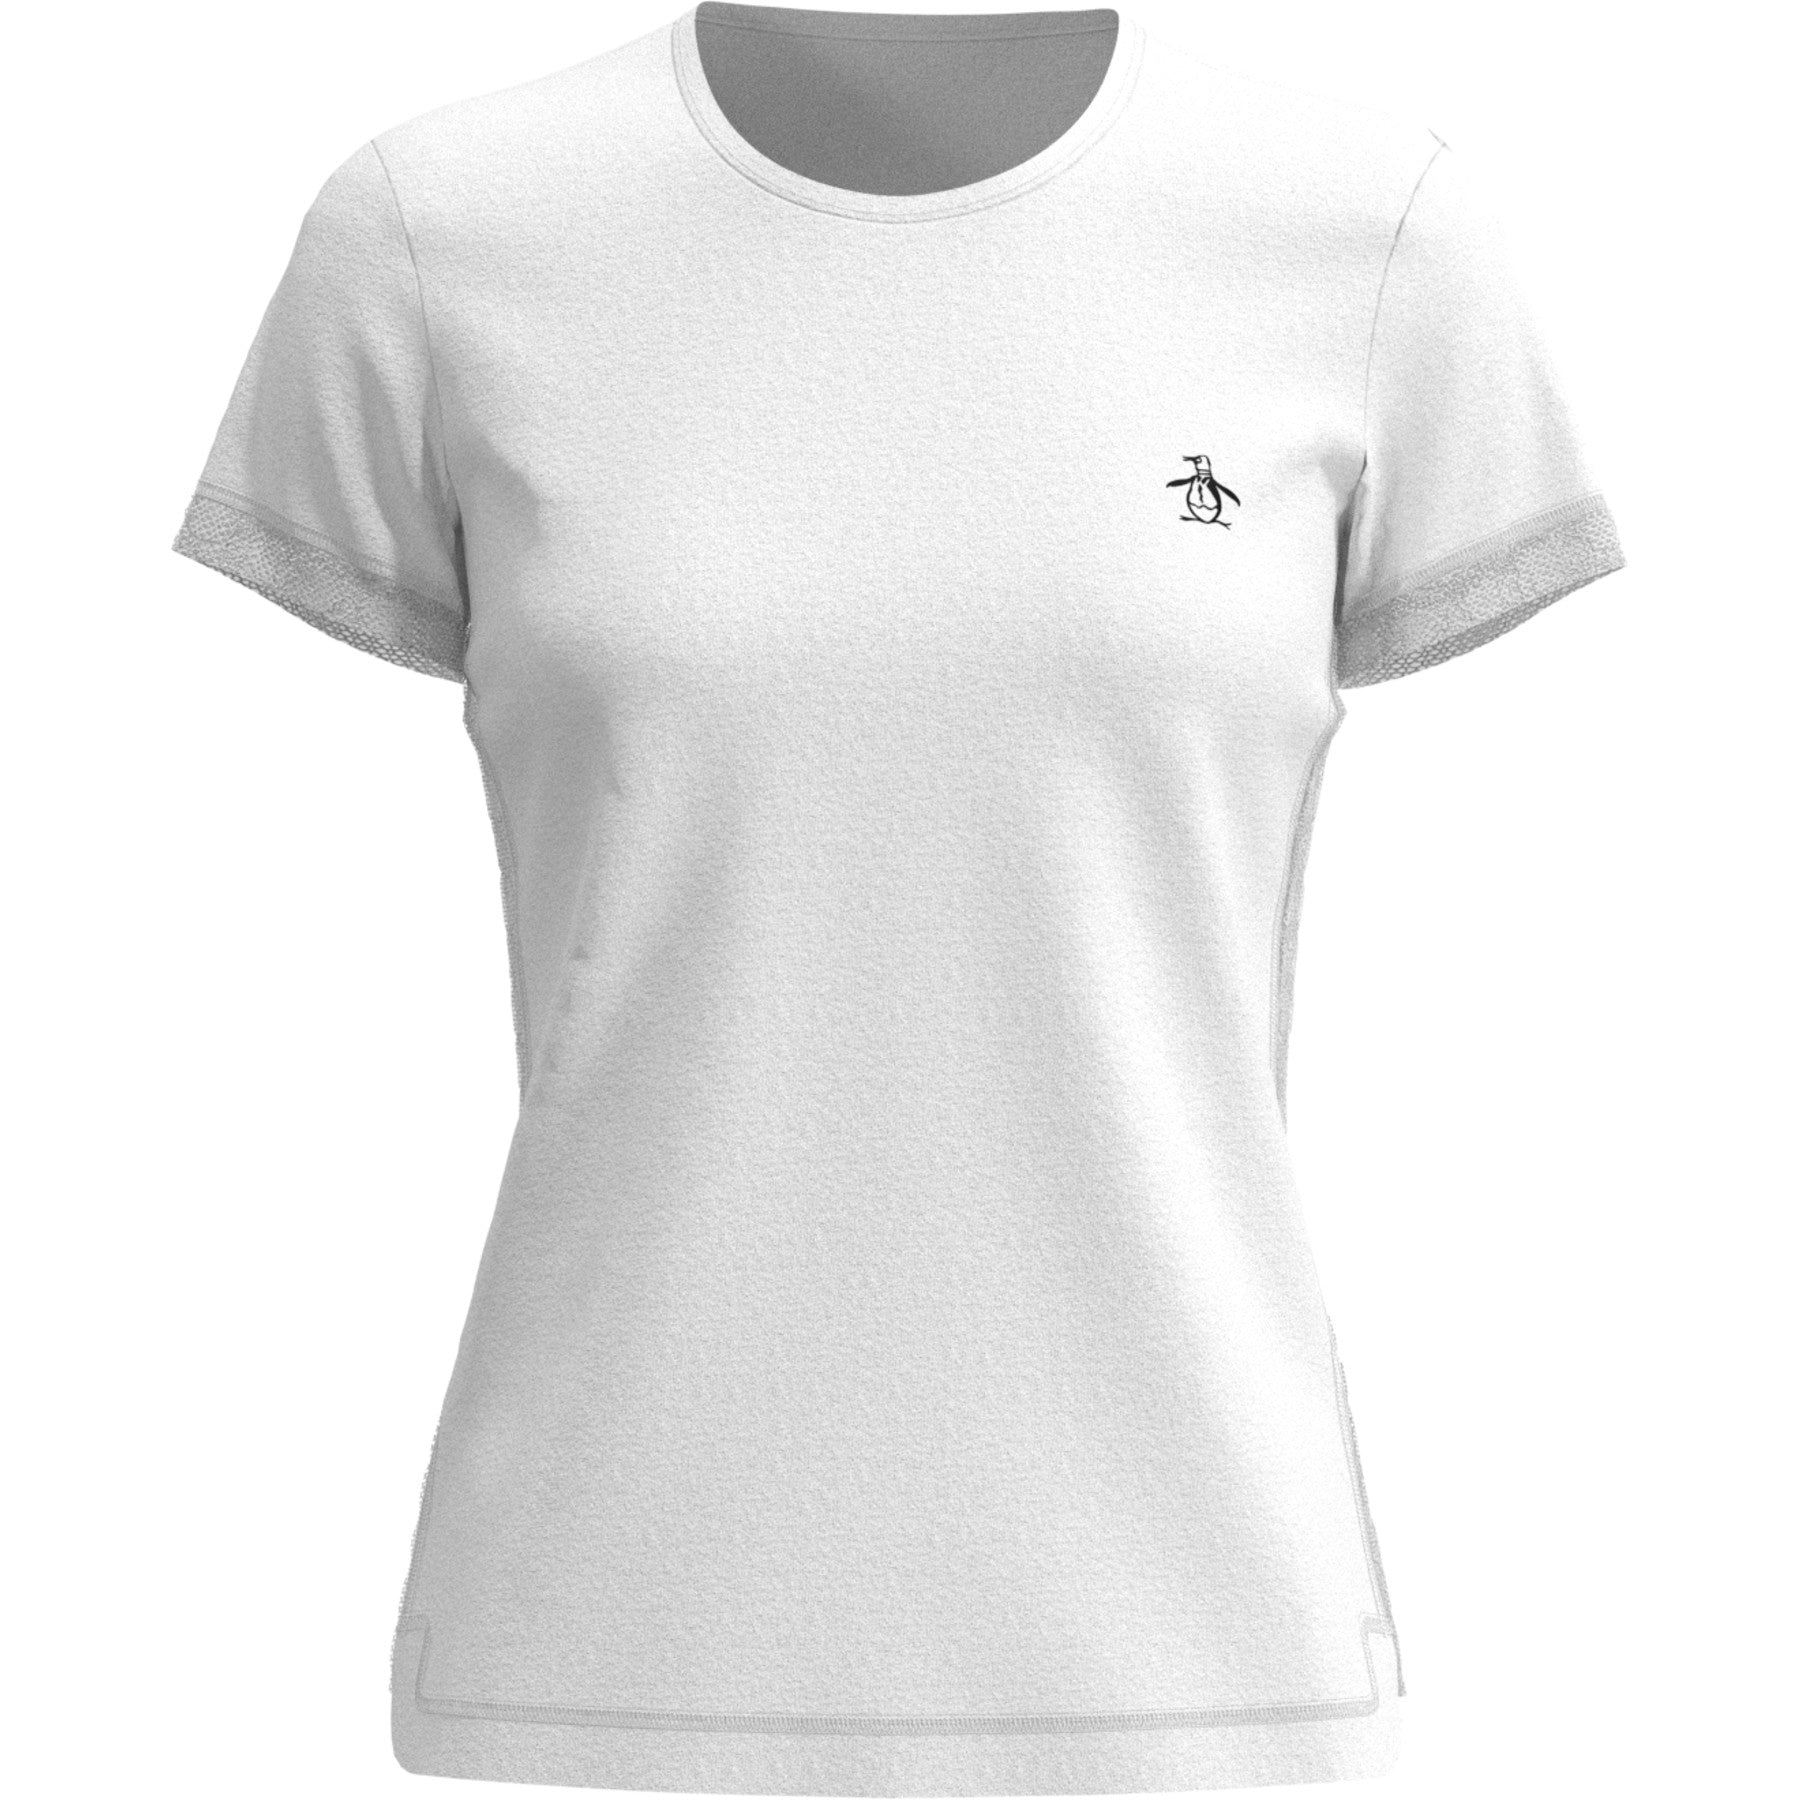 View Womens Essential Performance Tennis TShirt In Bright White information